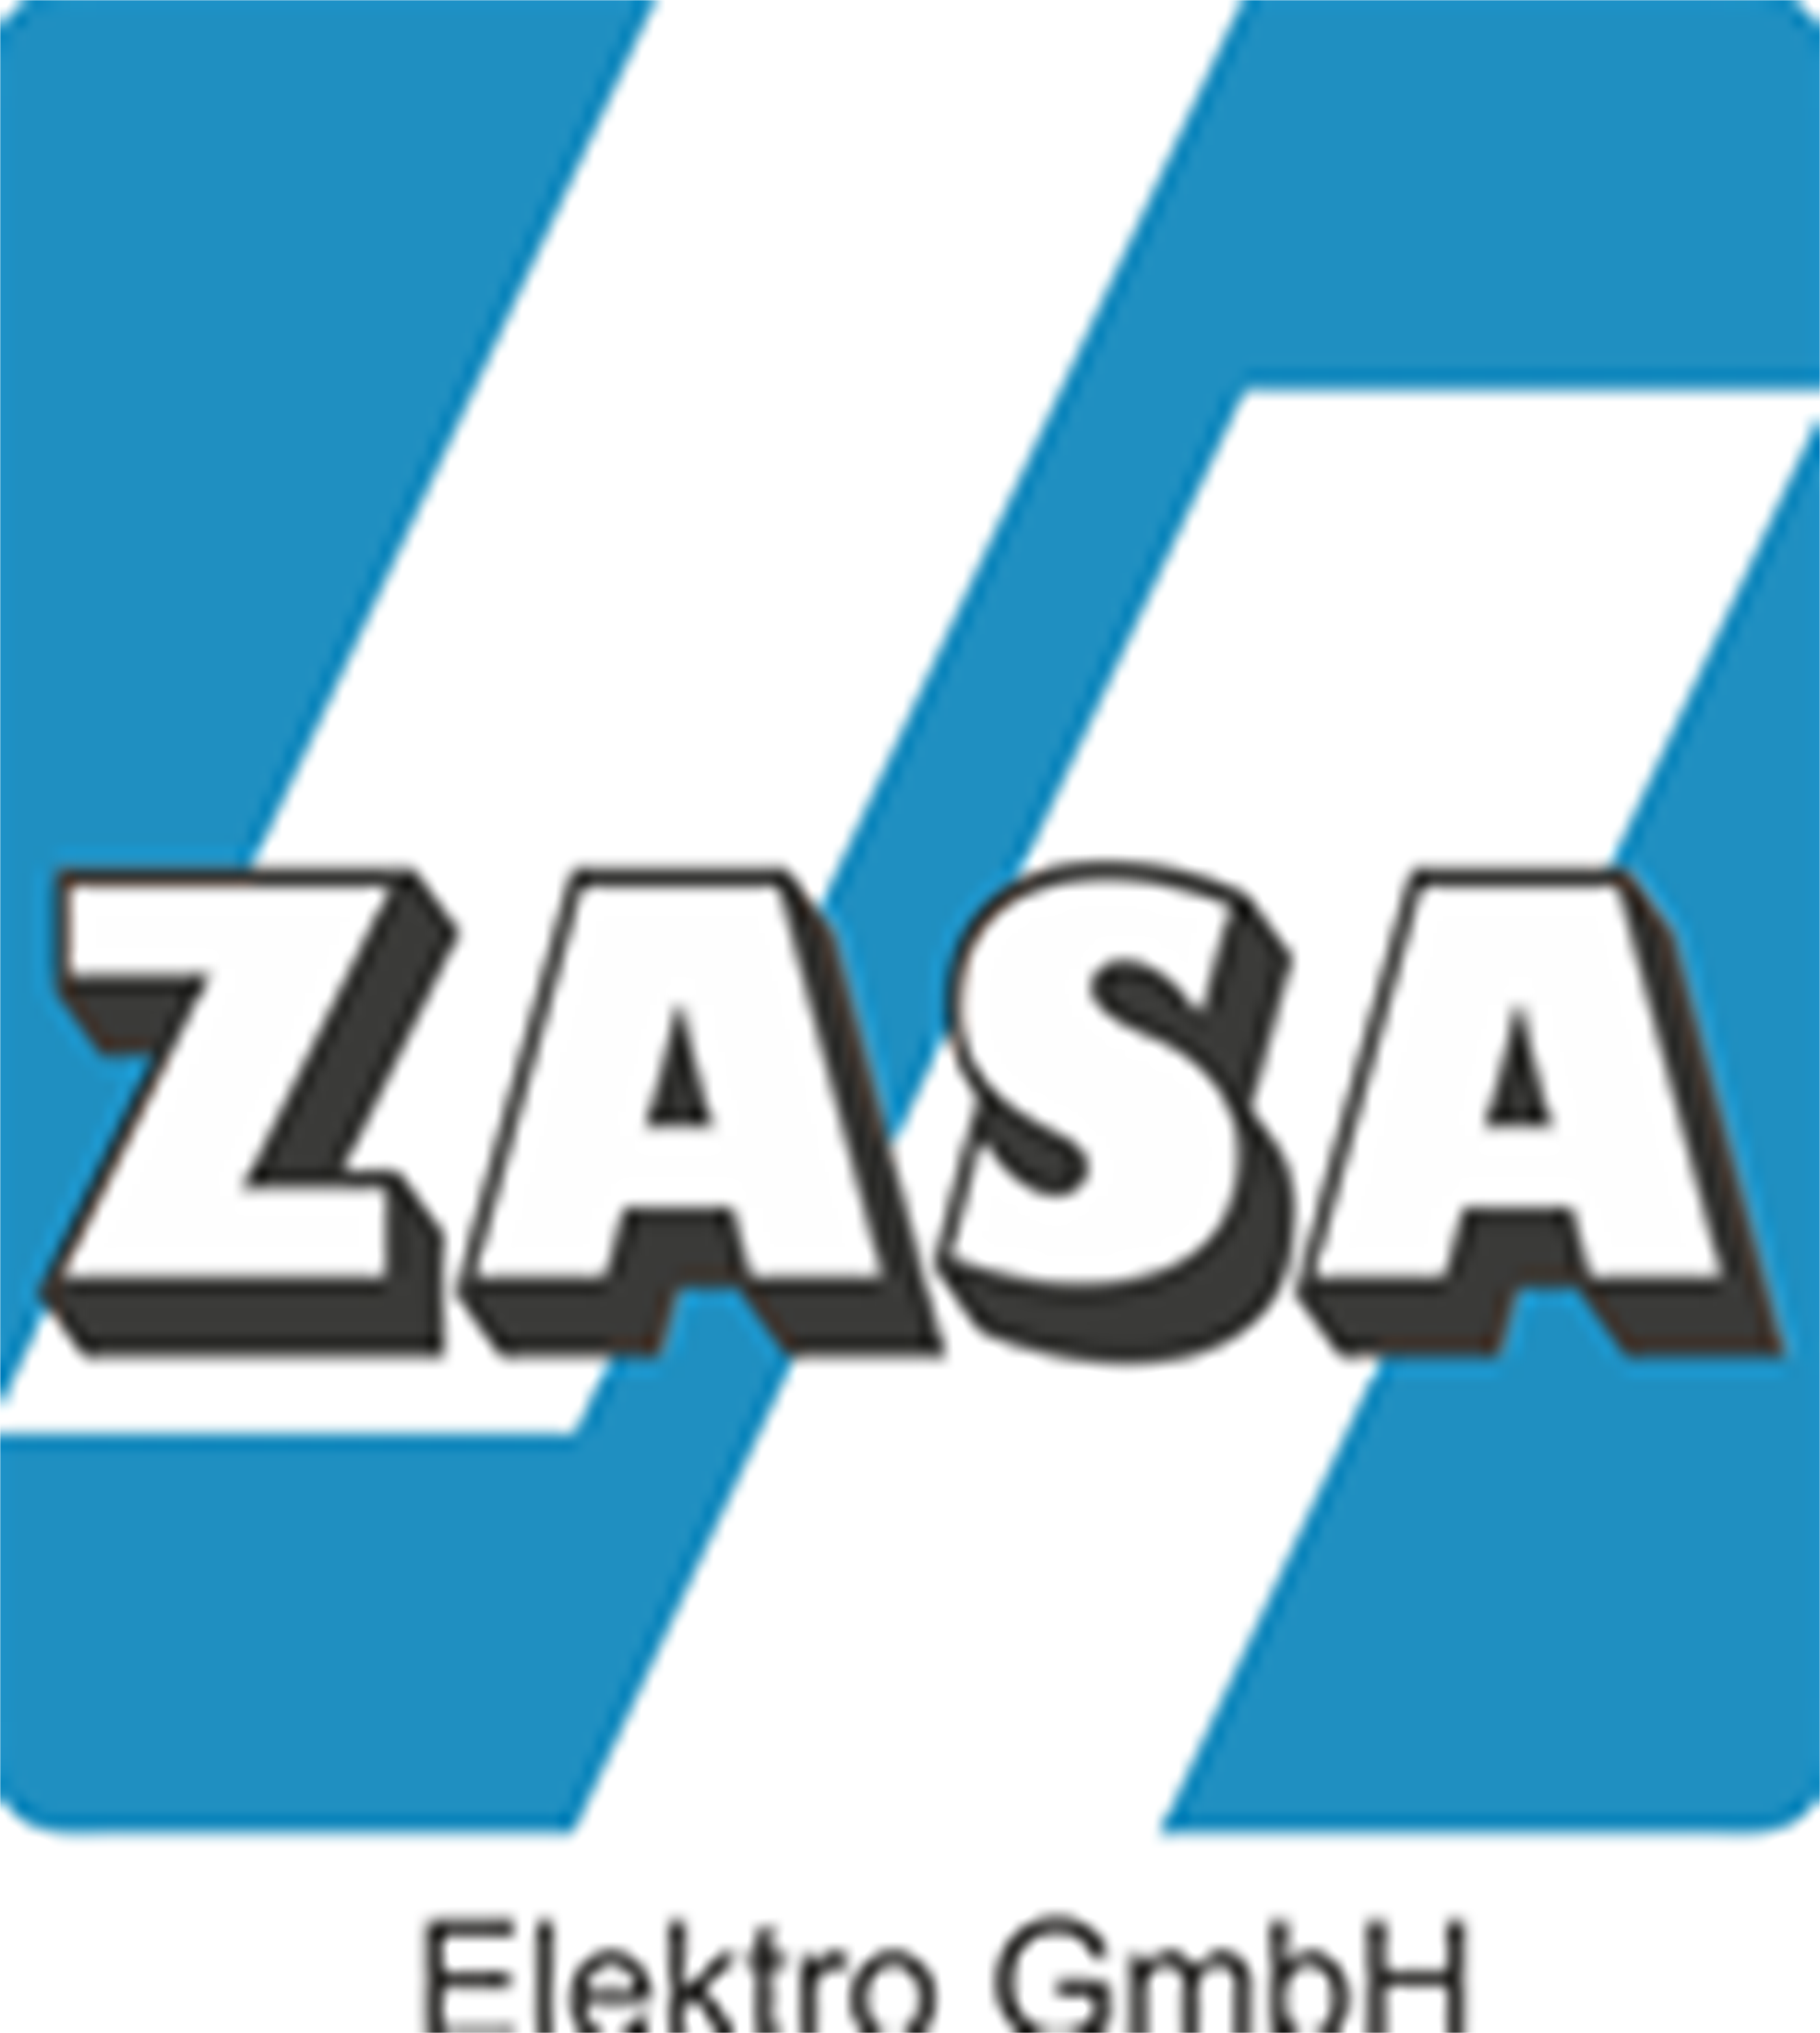 ZASA Elektro GmbH